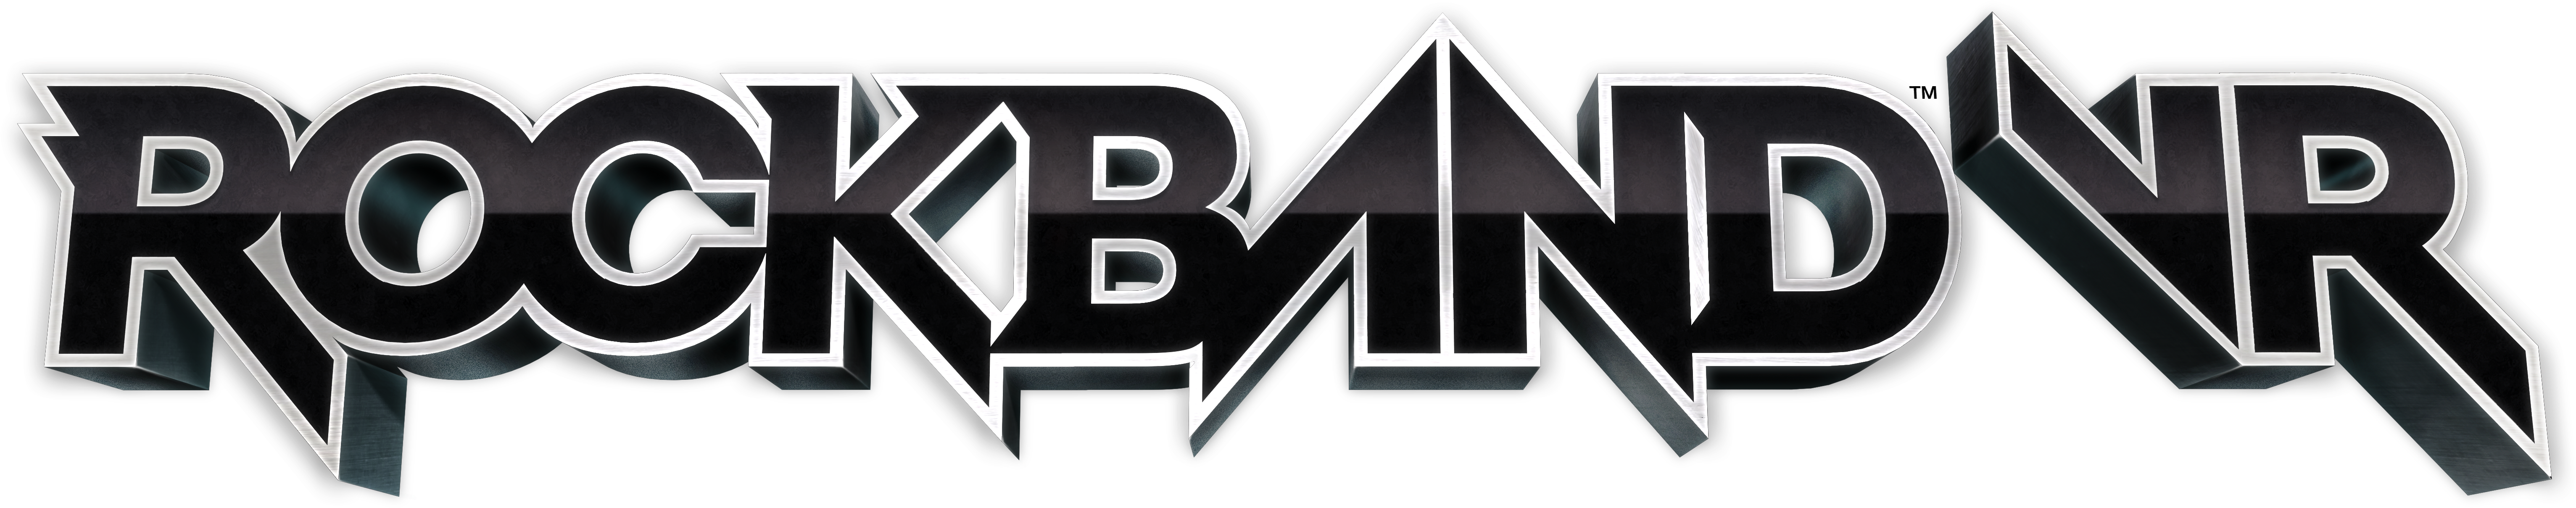 Rock system. Логотипы рок групп. Рок ВР. Rock Band 4 logo. Группа VR PNG.